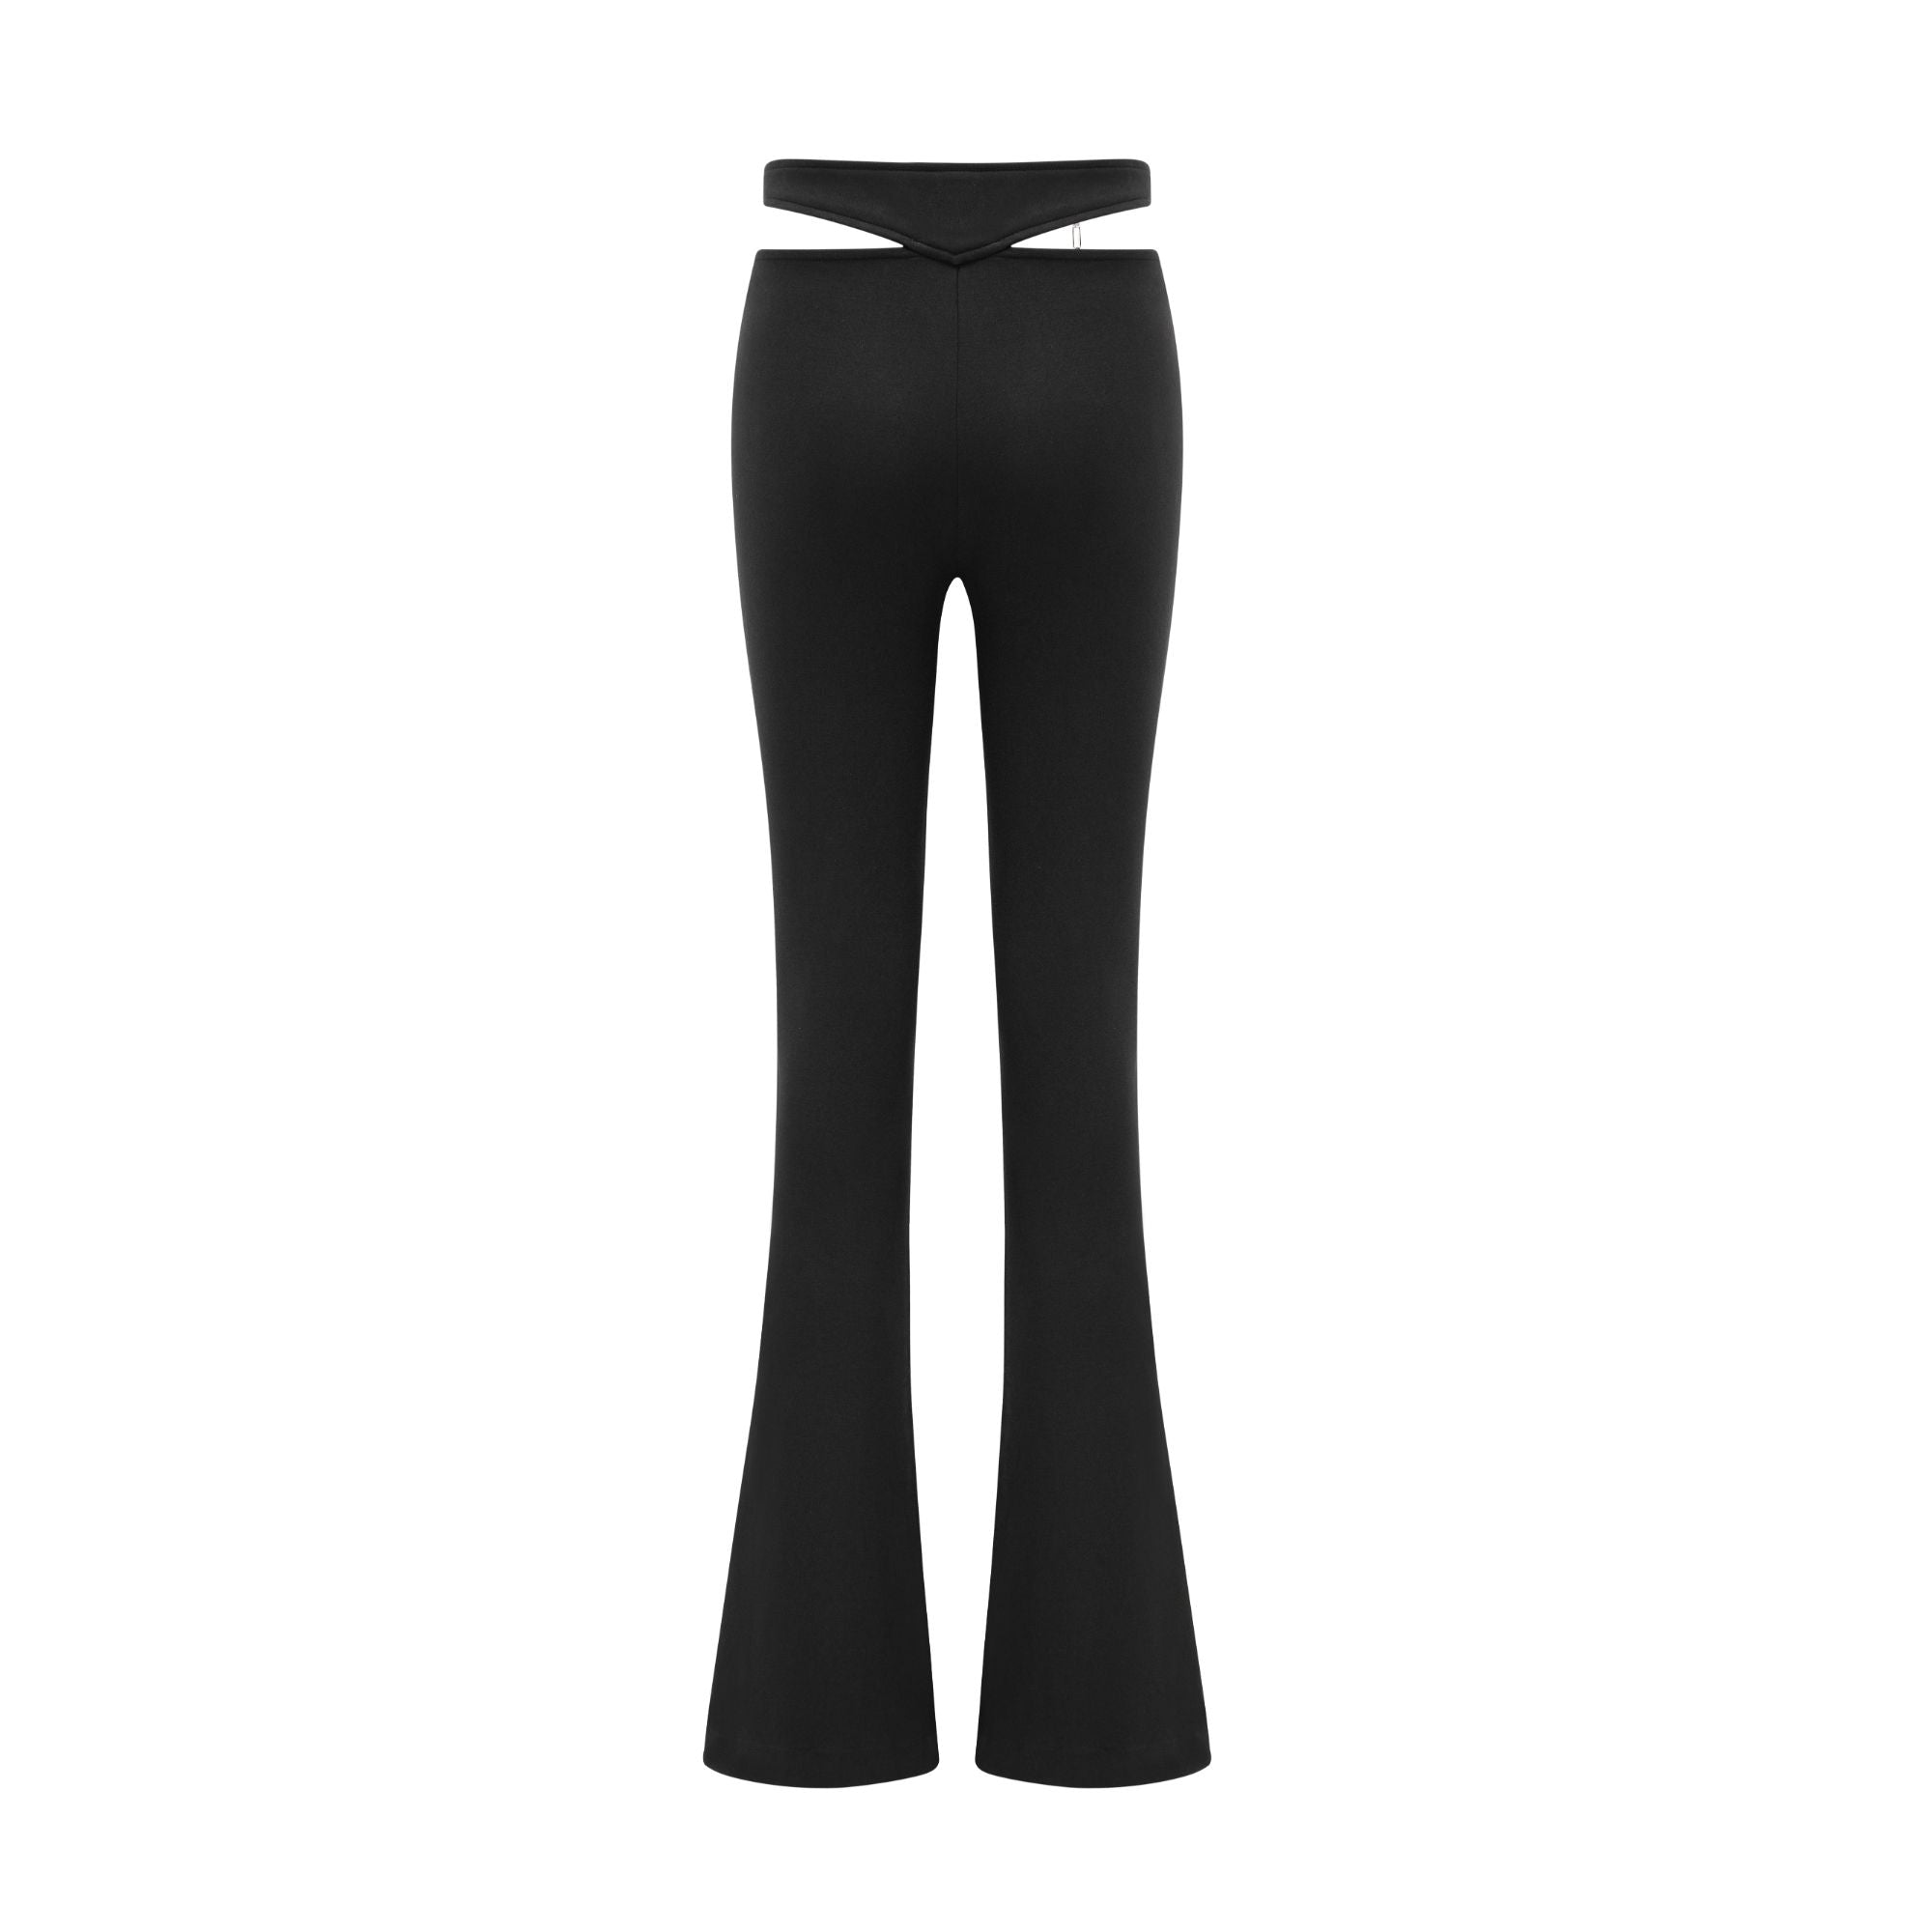 Ursuline cut-out flared pants - Miss Rosier - Women's Online Boutique